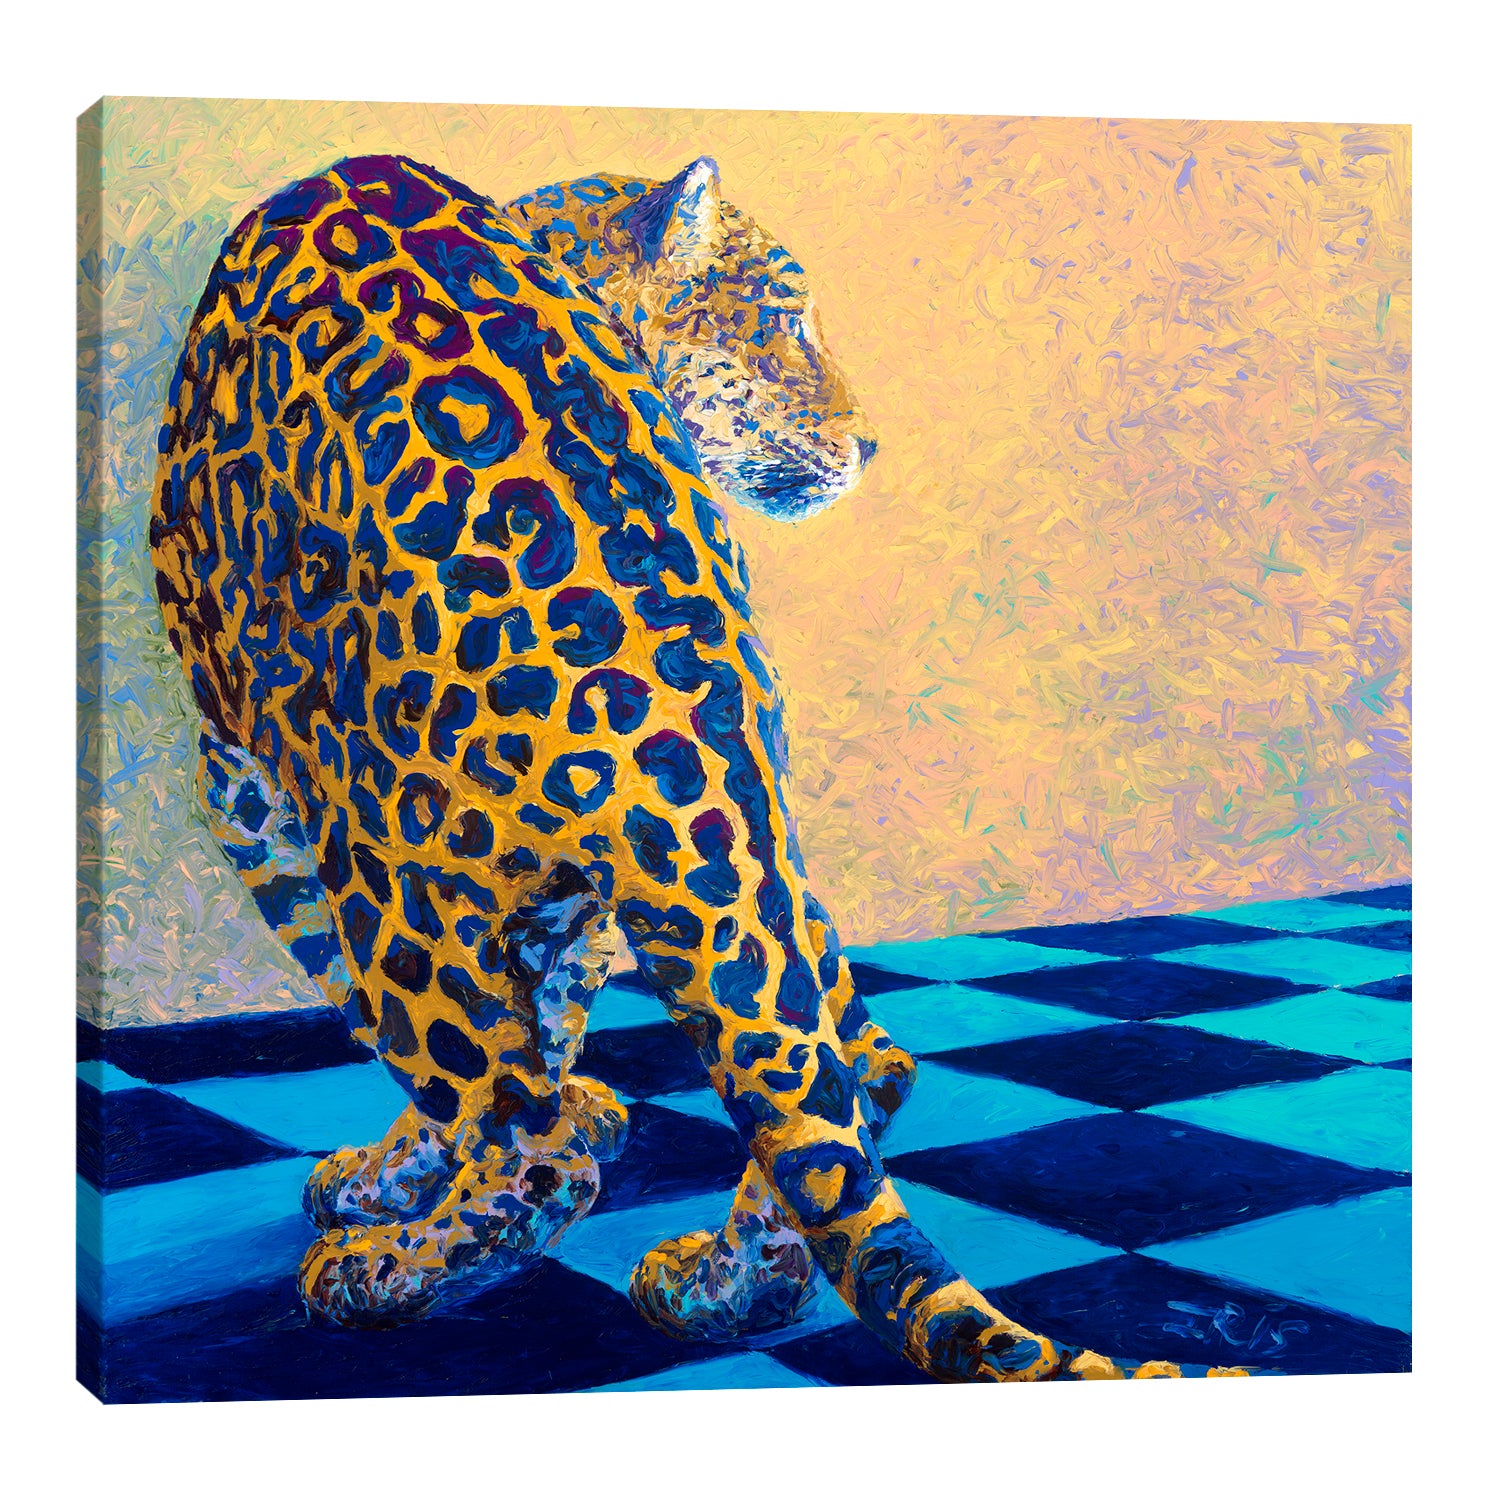 Iris-Scott,Modern & Contemporary,Animals,leopard,animals,leopards,animal,tiles,squares,patterns,